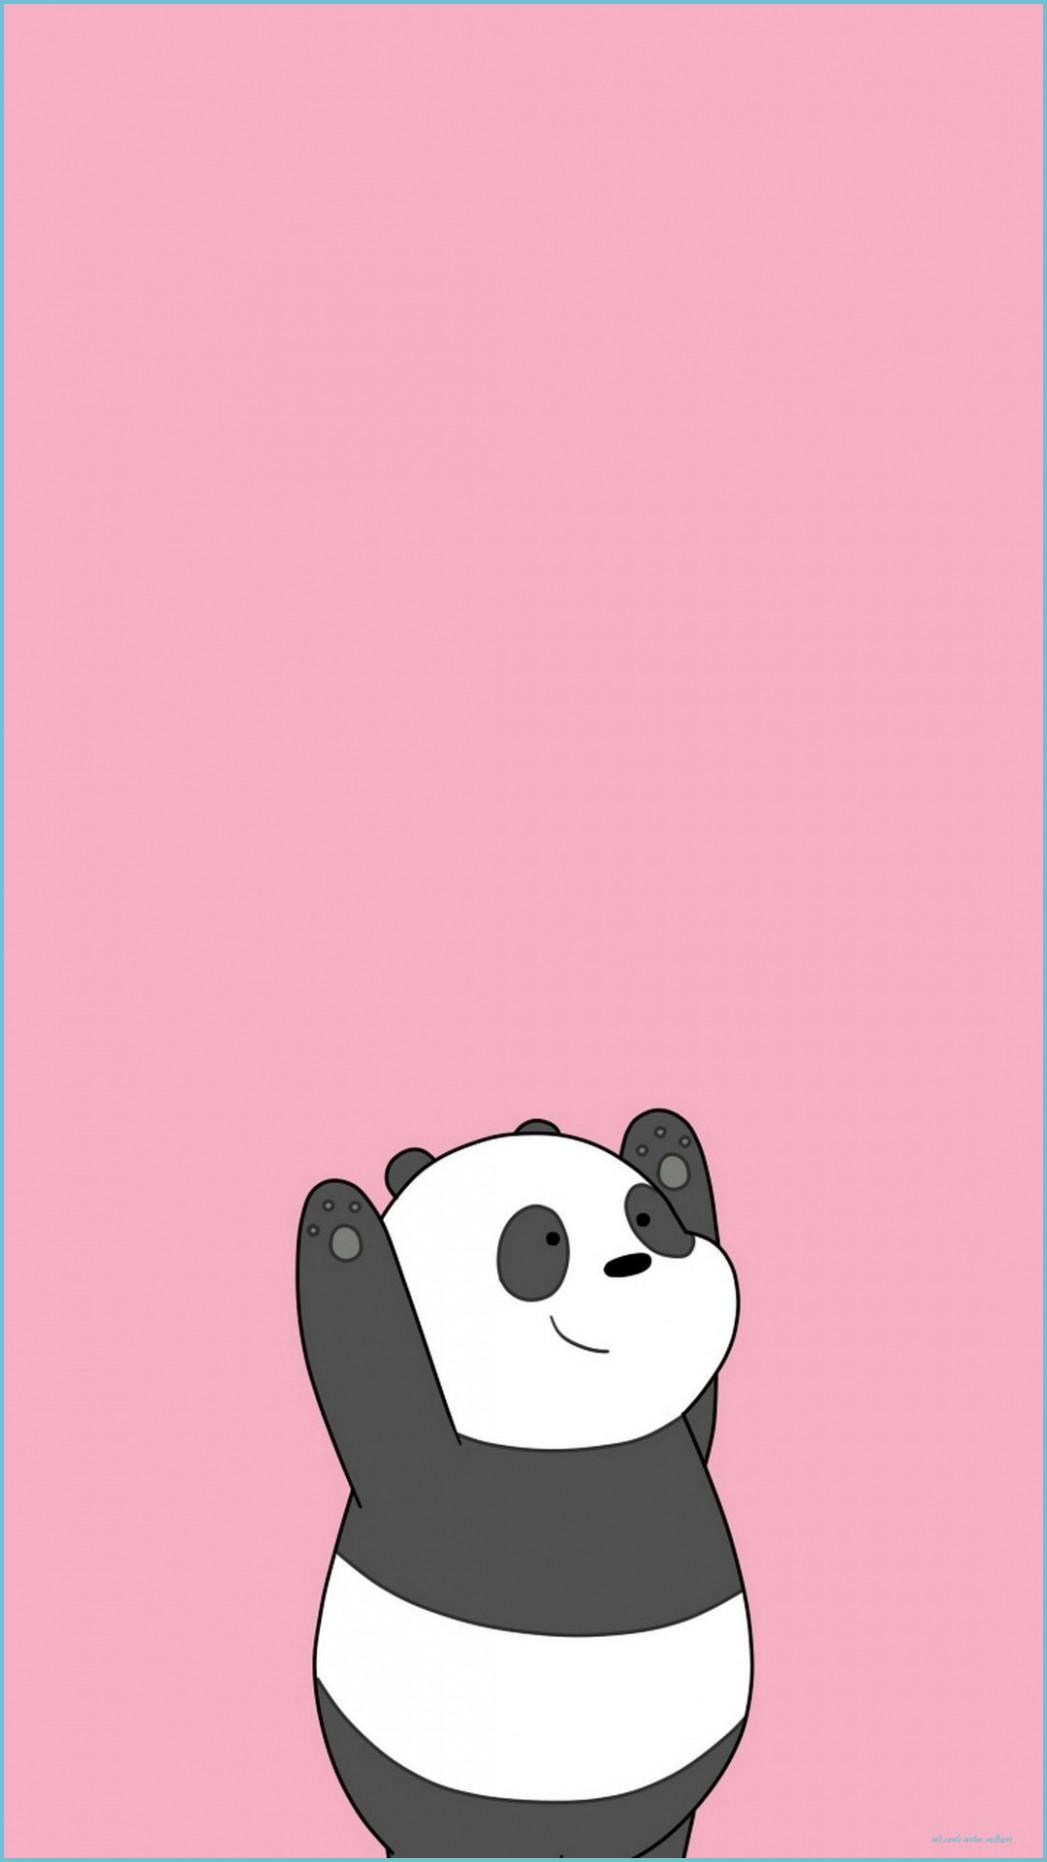 Baby Panda Cartoon Wallpapers - Top Free Baby Panda Cartoon Backgrounds ...